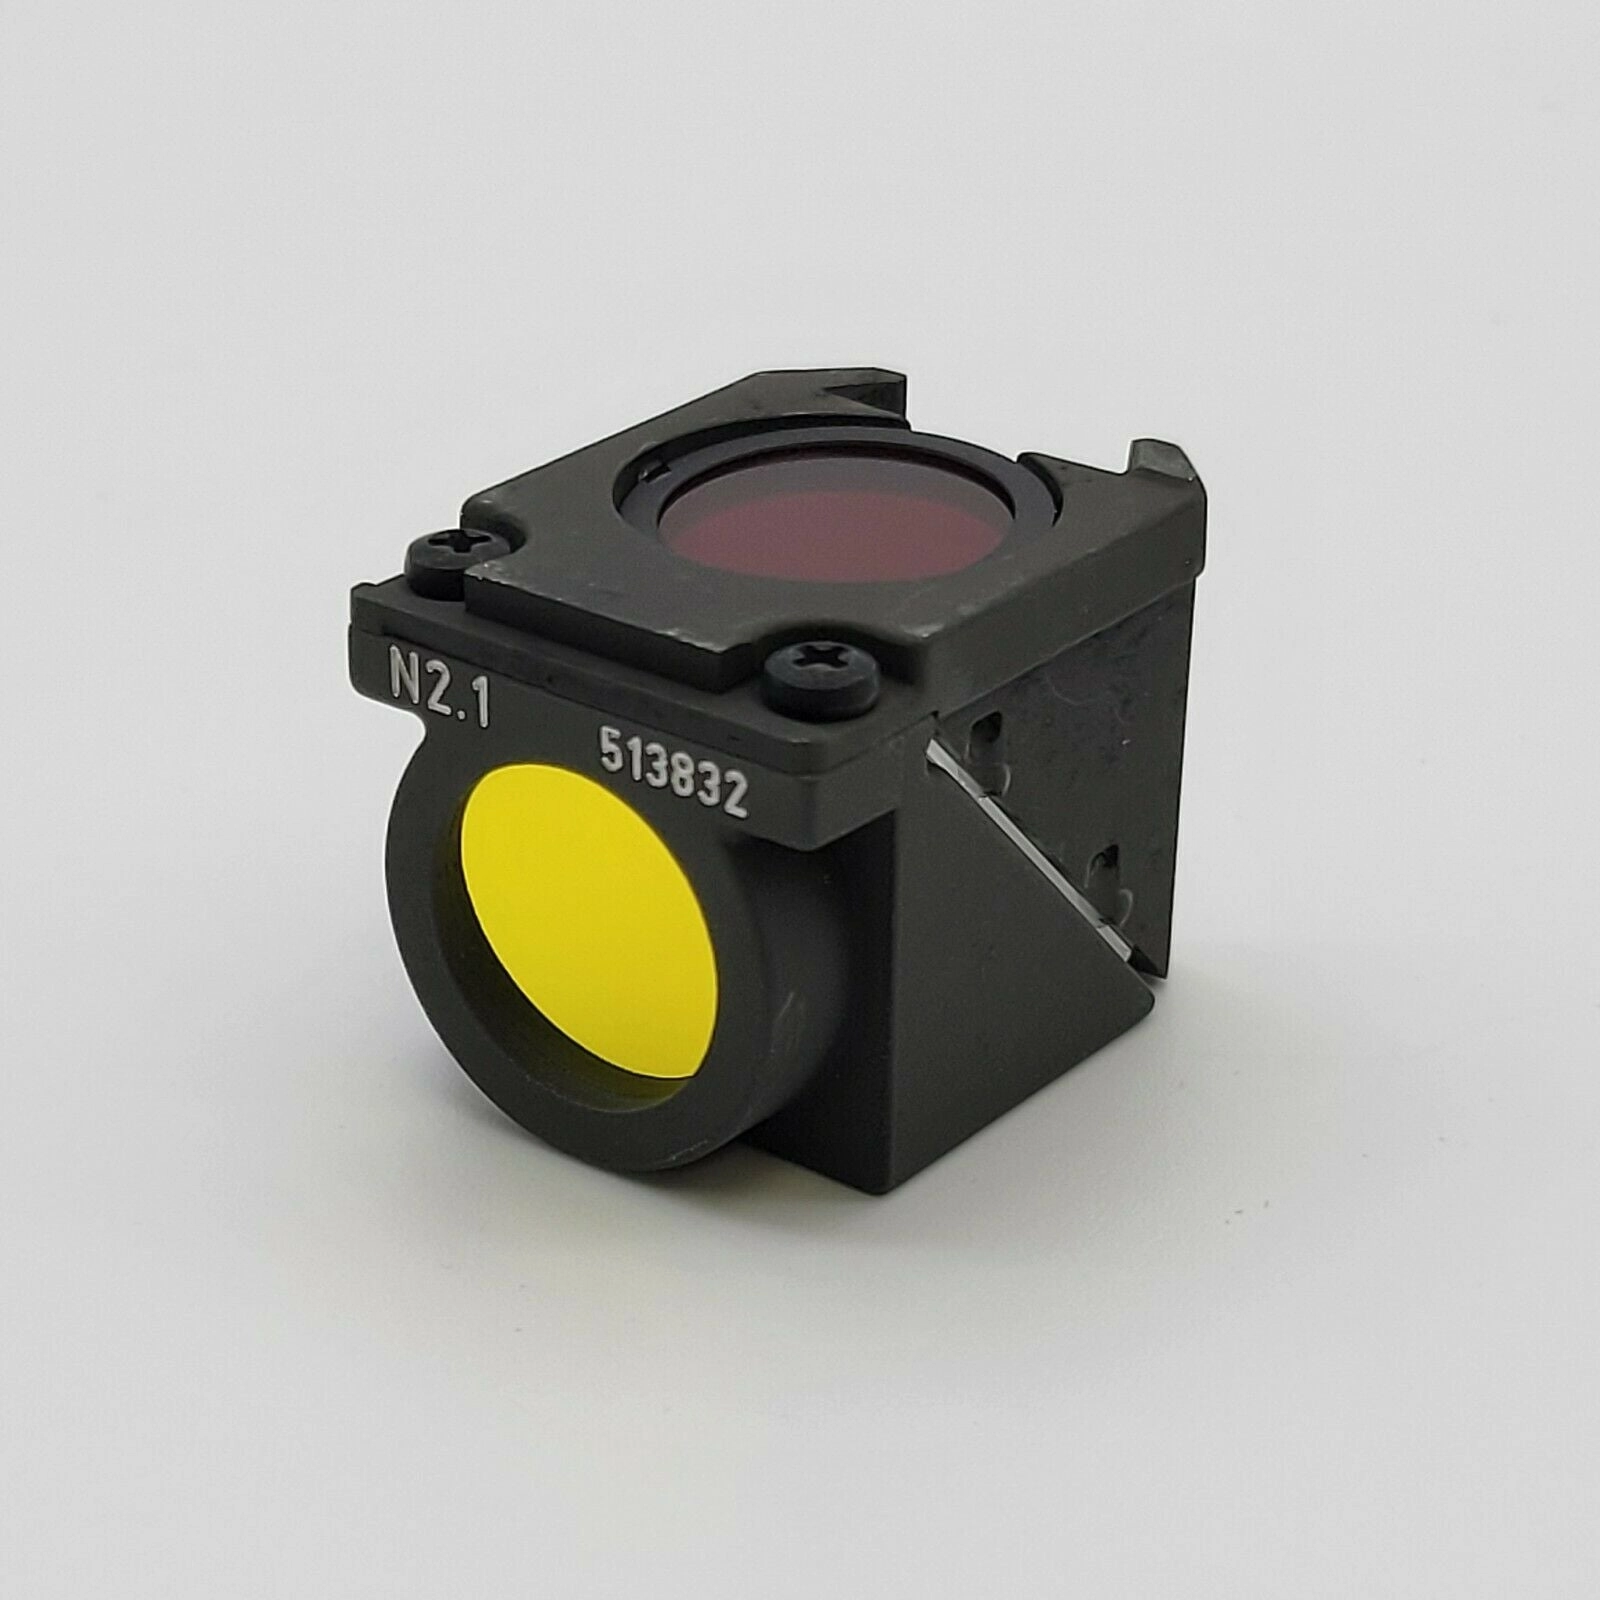 Leica Leitz Microscope Fluorescence Filter Cube N2.1 DM 513832